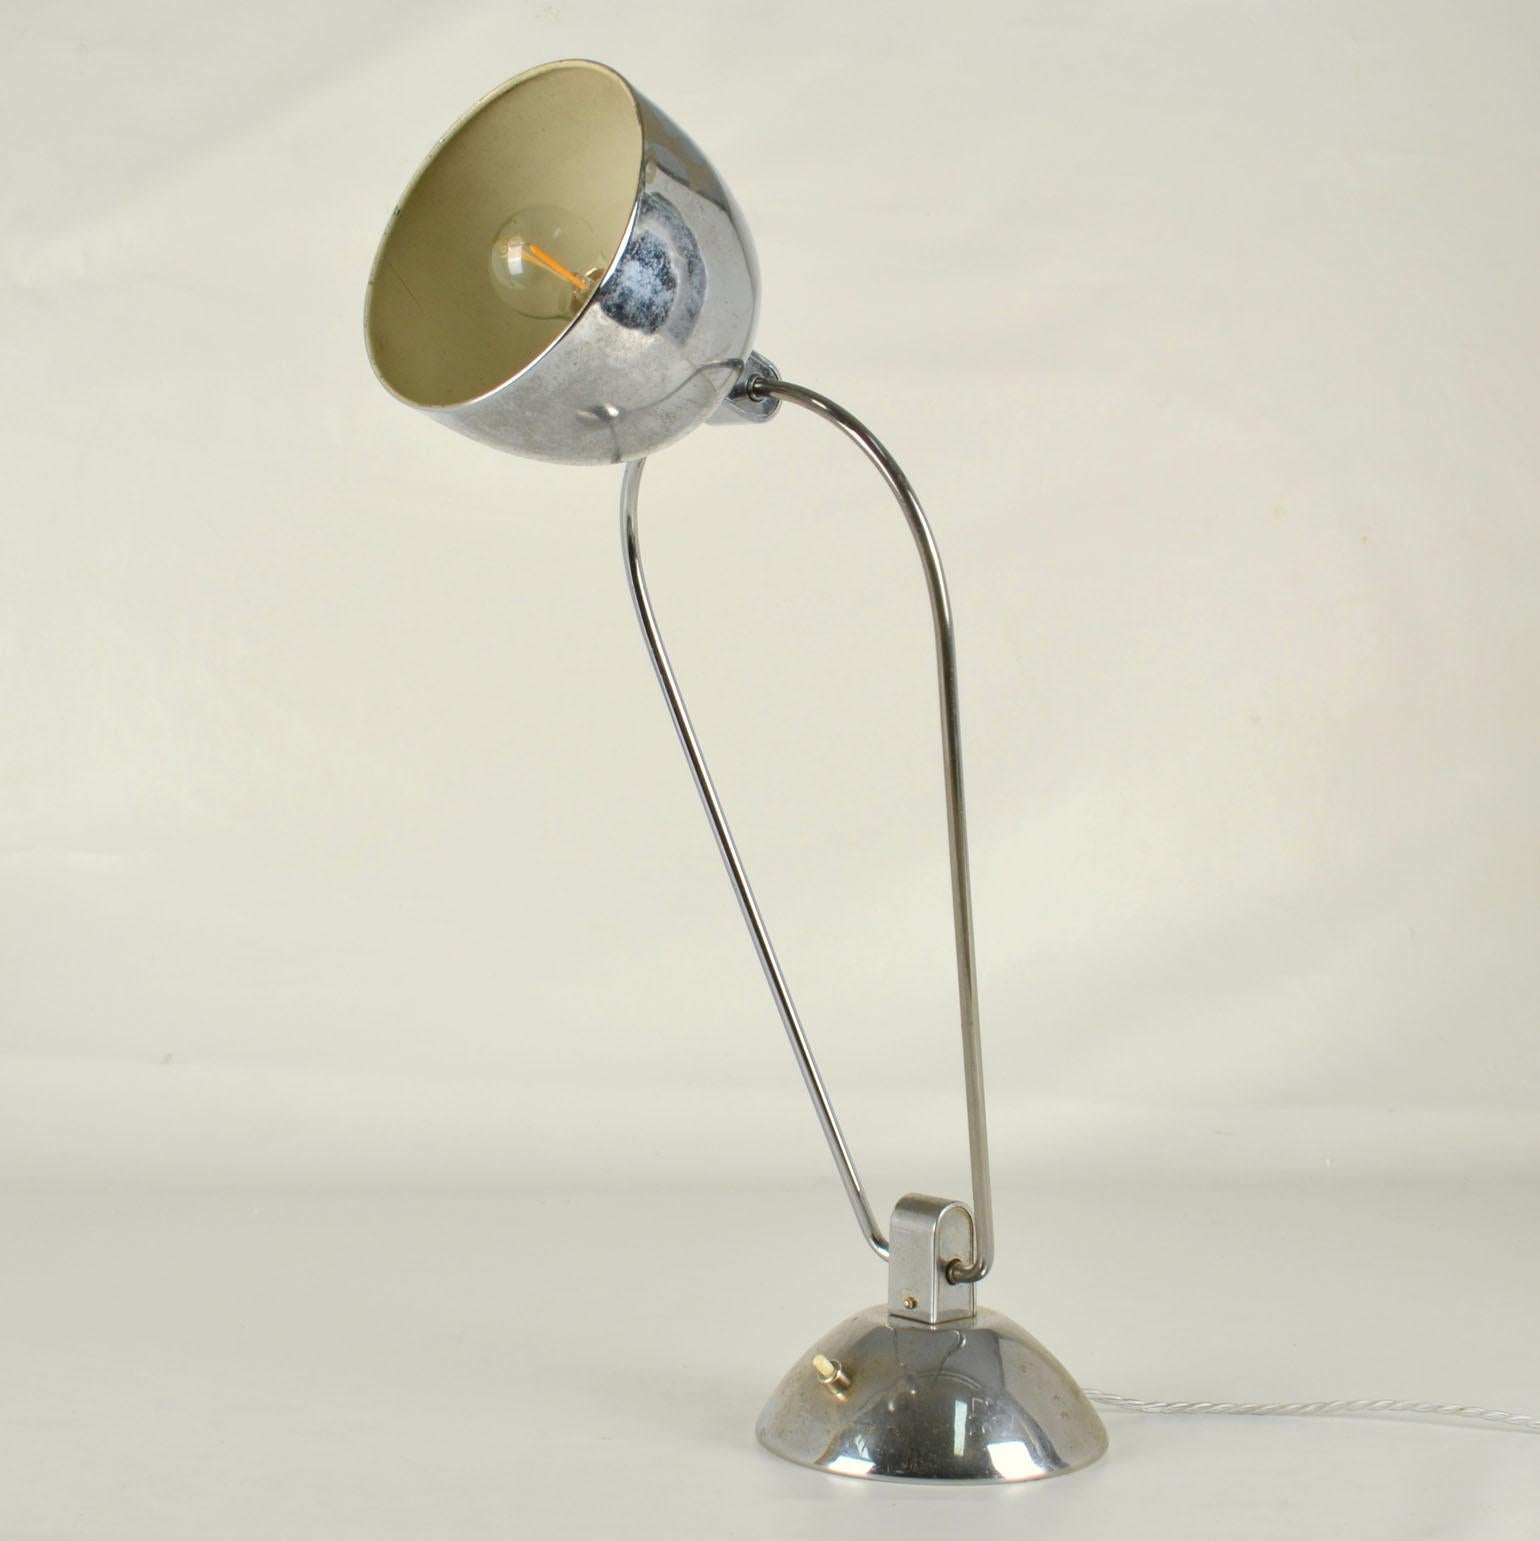  Modernist Desk Lamp Jumo designed by Yves Jujeau and André Mounique For Sale 3